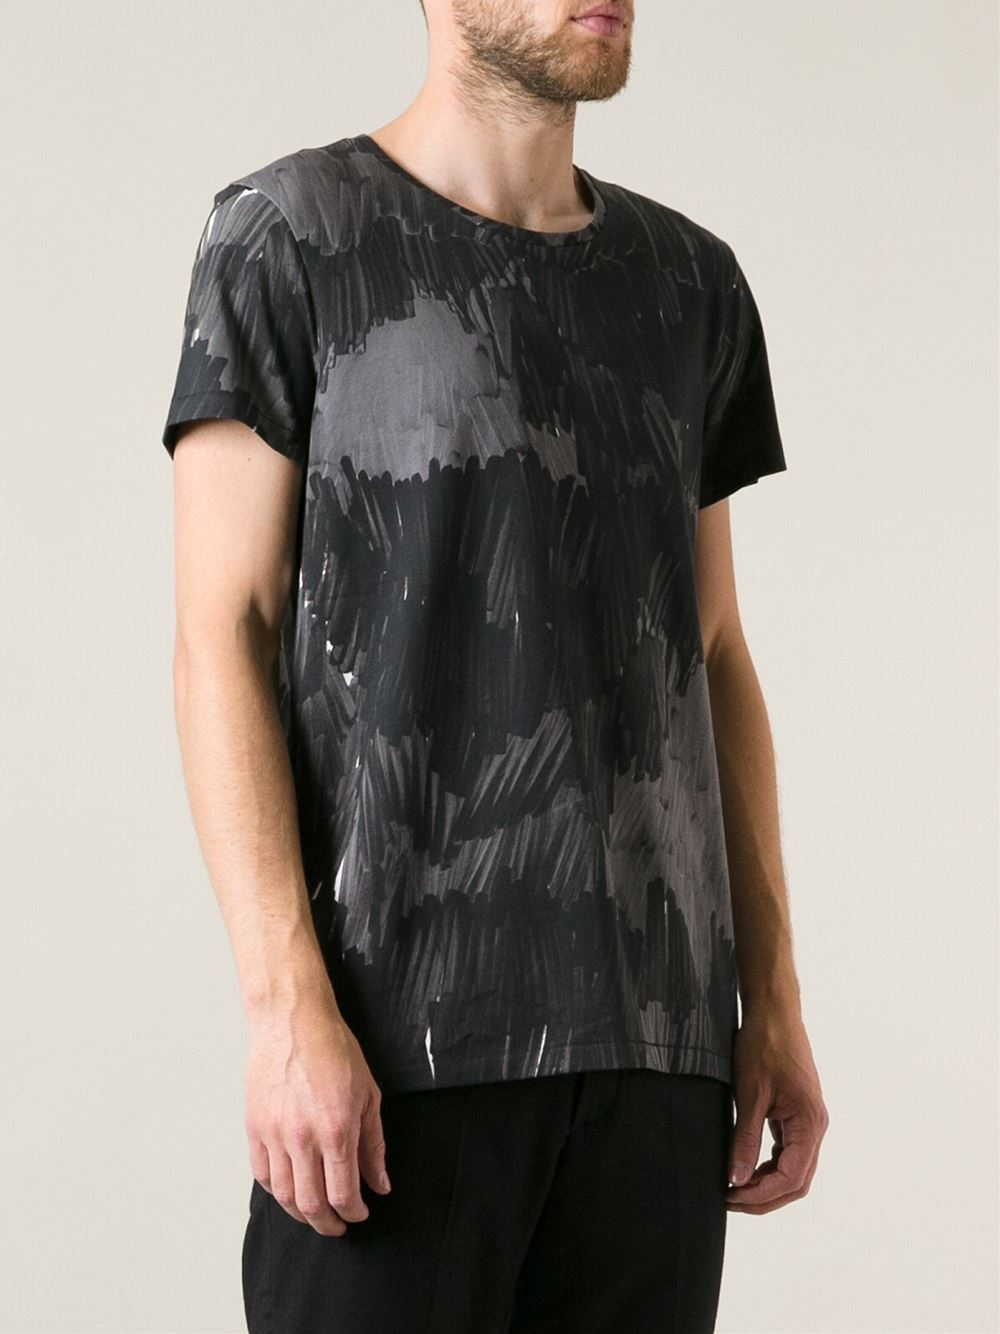 Acne Studios Scribble Print T-Shirt in Grey (Gray) for Men - Lyst